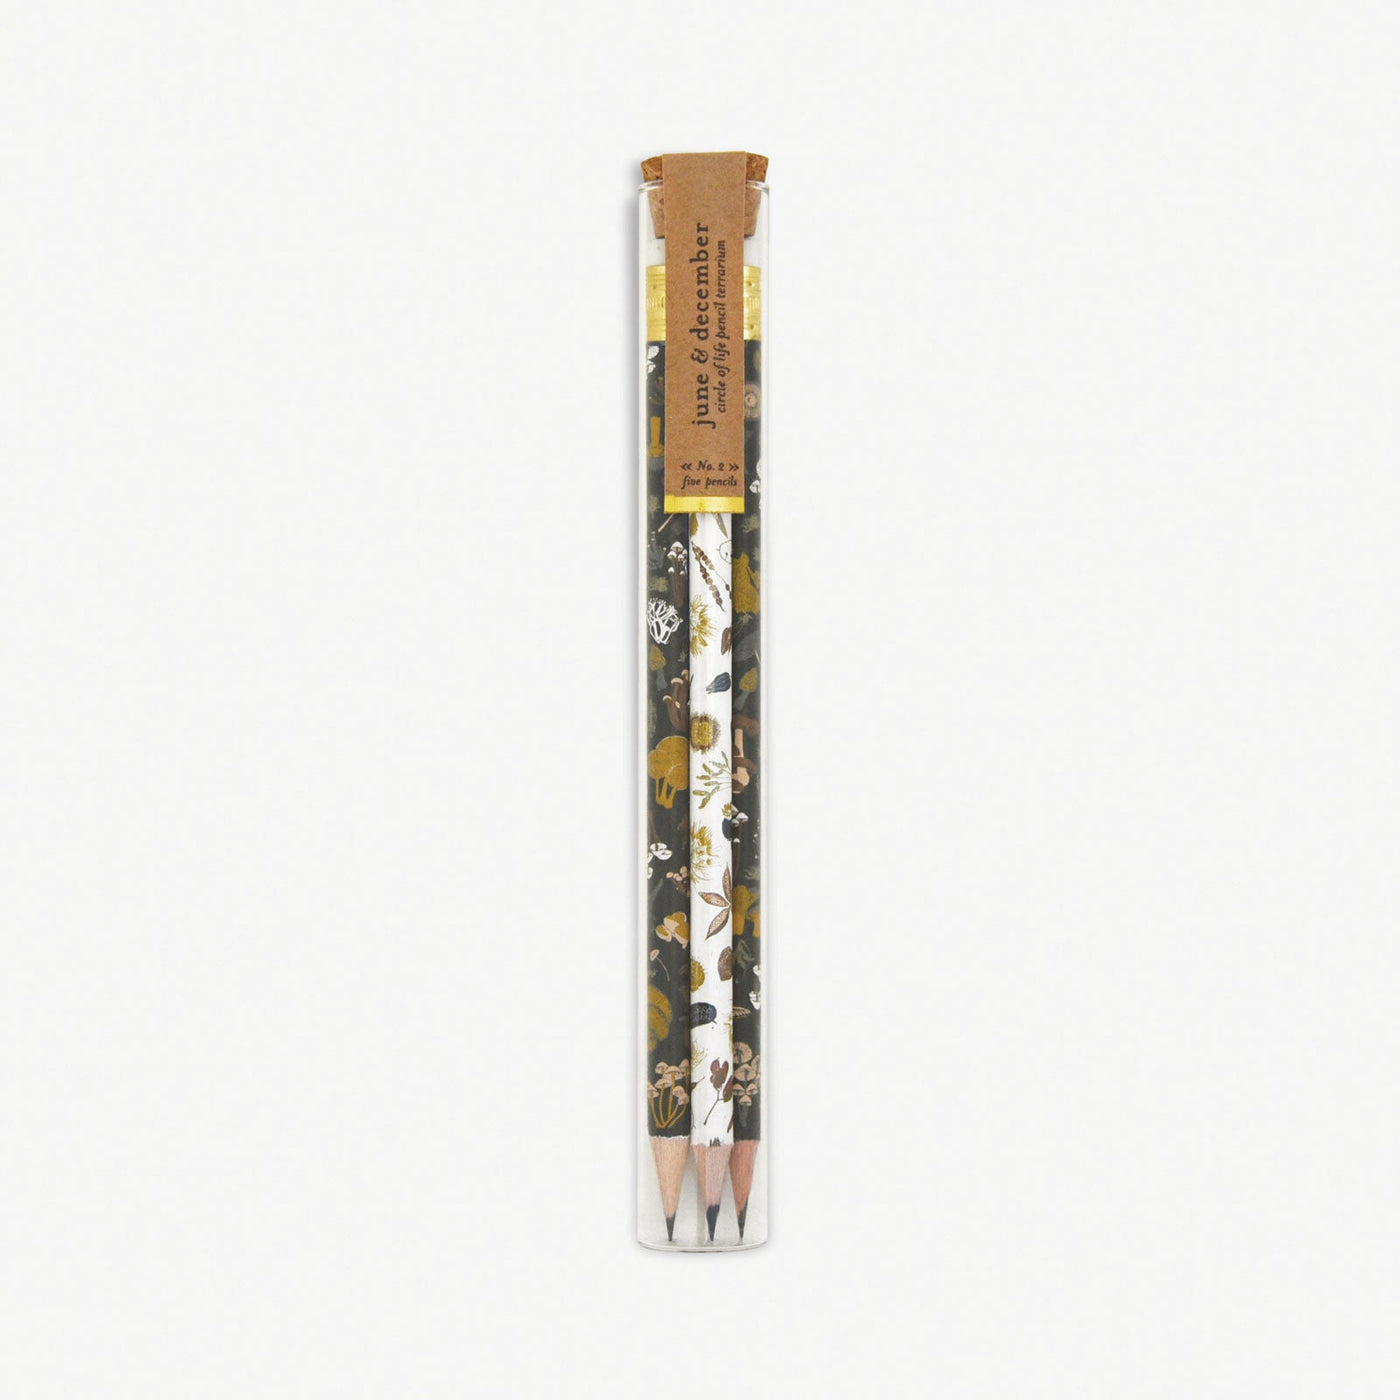 Circle of Life Pencil Terrarium, set of 5 pencils - June & December